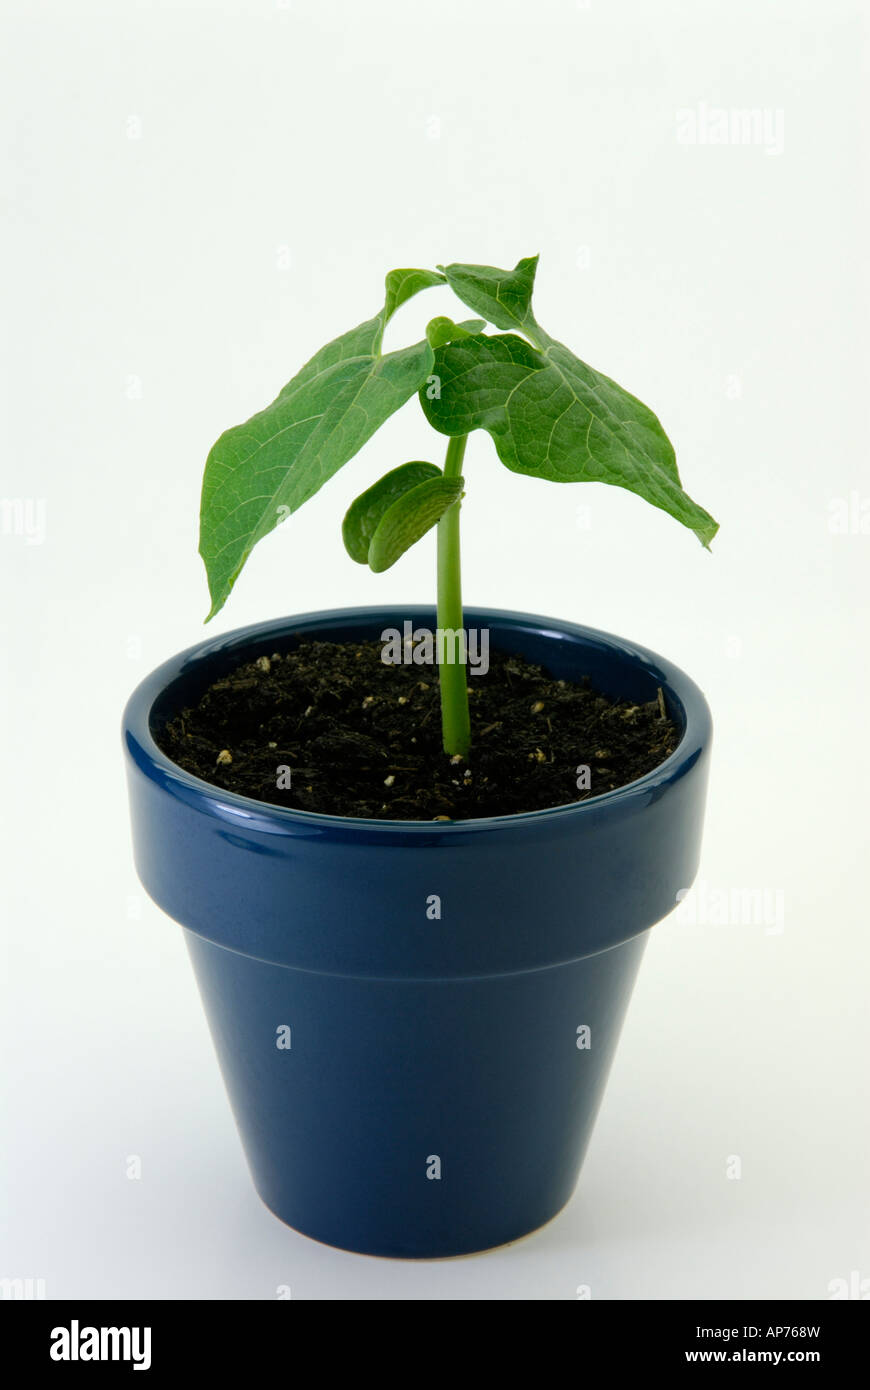 Potted bean plant, Phaseolus vulgaris, common bean plant in blue ceramic pot Stock Photo